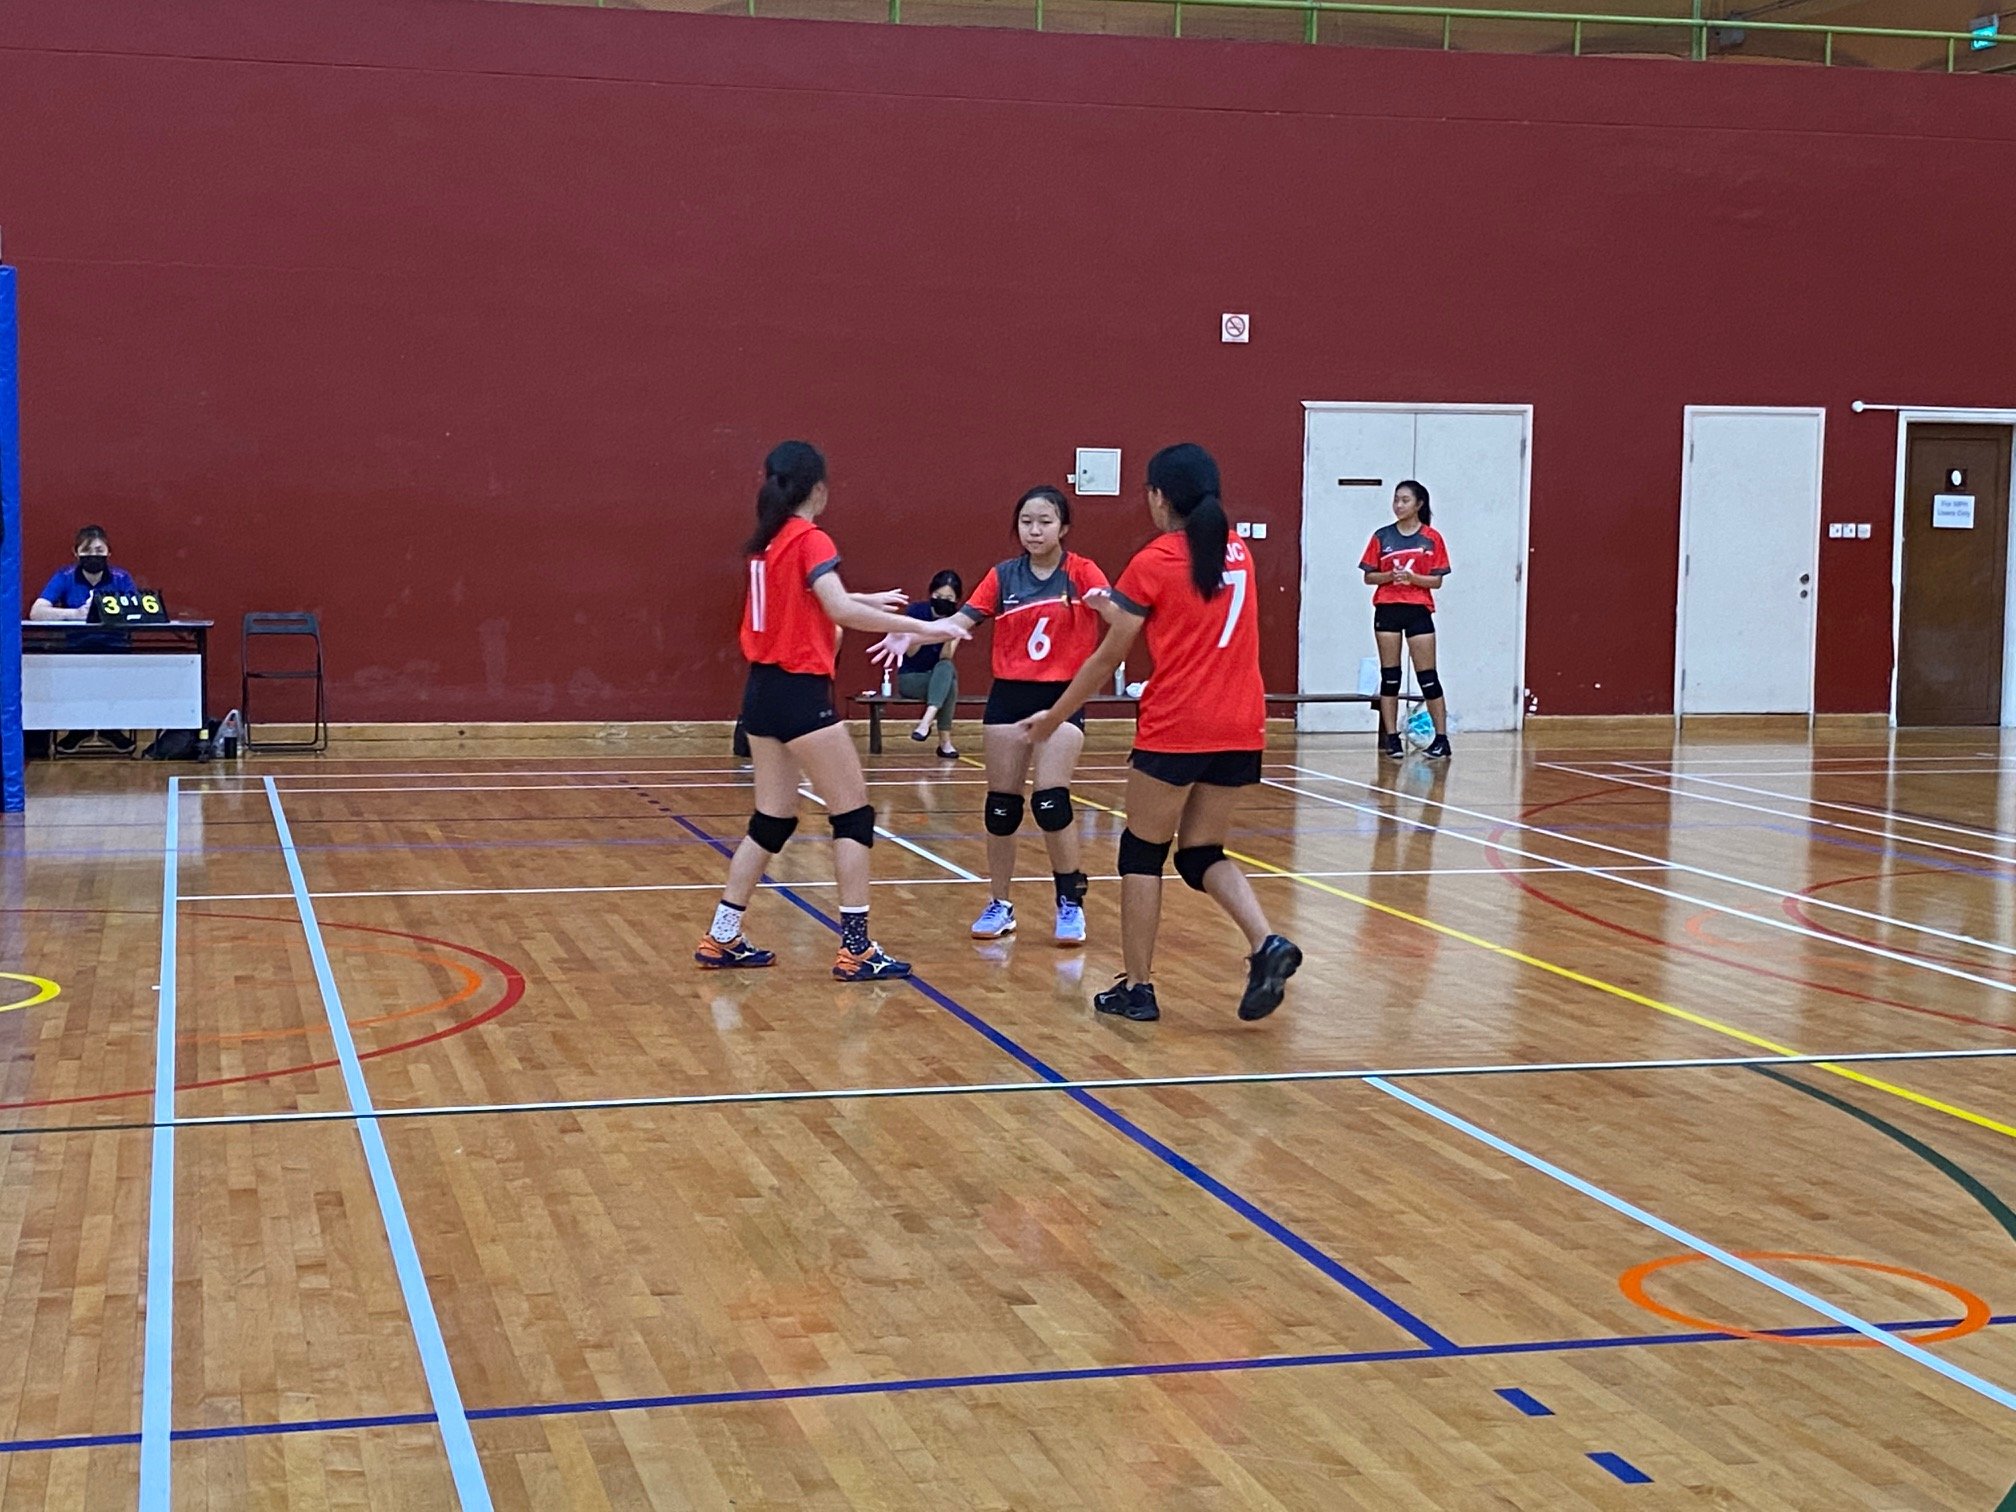 NSG A Div girls’ volleyball prelim rd - ACJC (red) vs TJC (black) 9